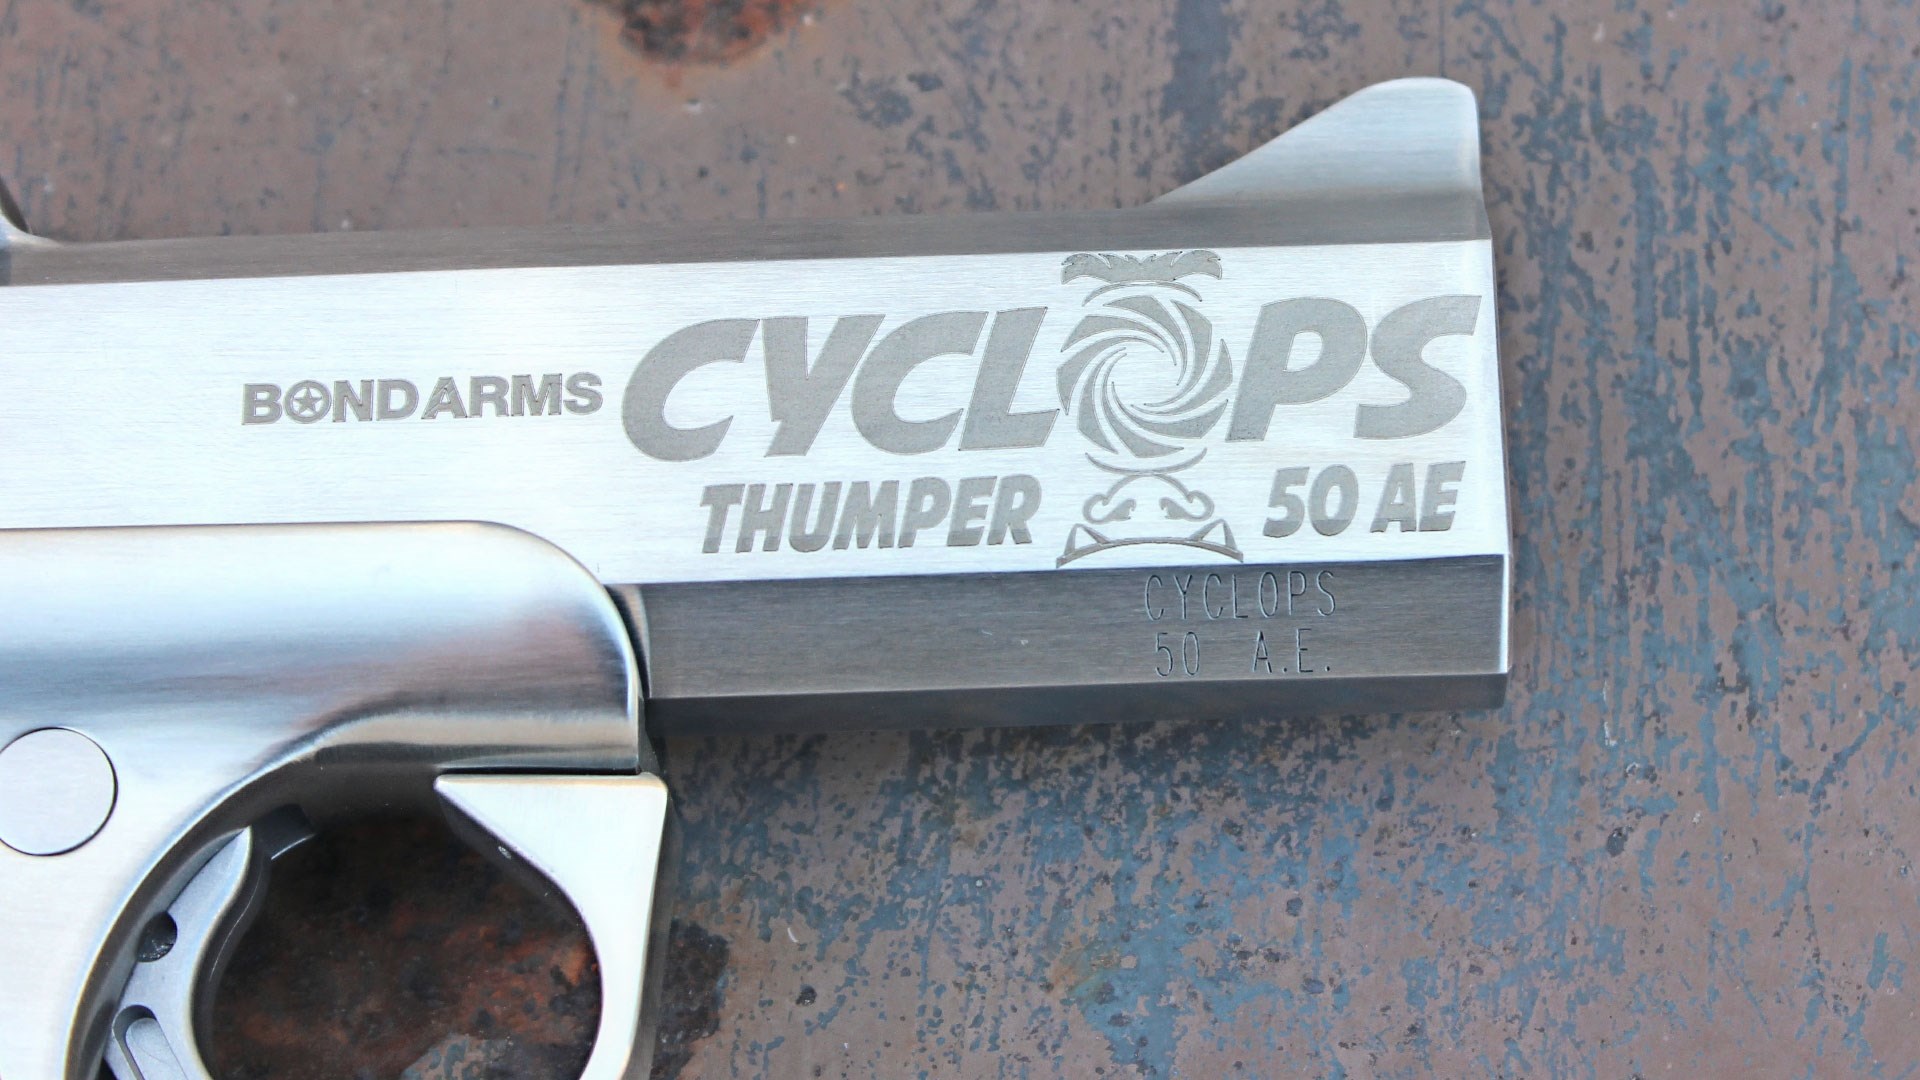 Bond Arms Cyclops Thumper barrel stamp